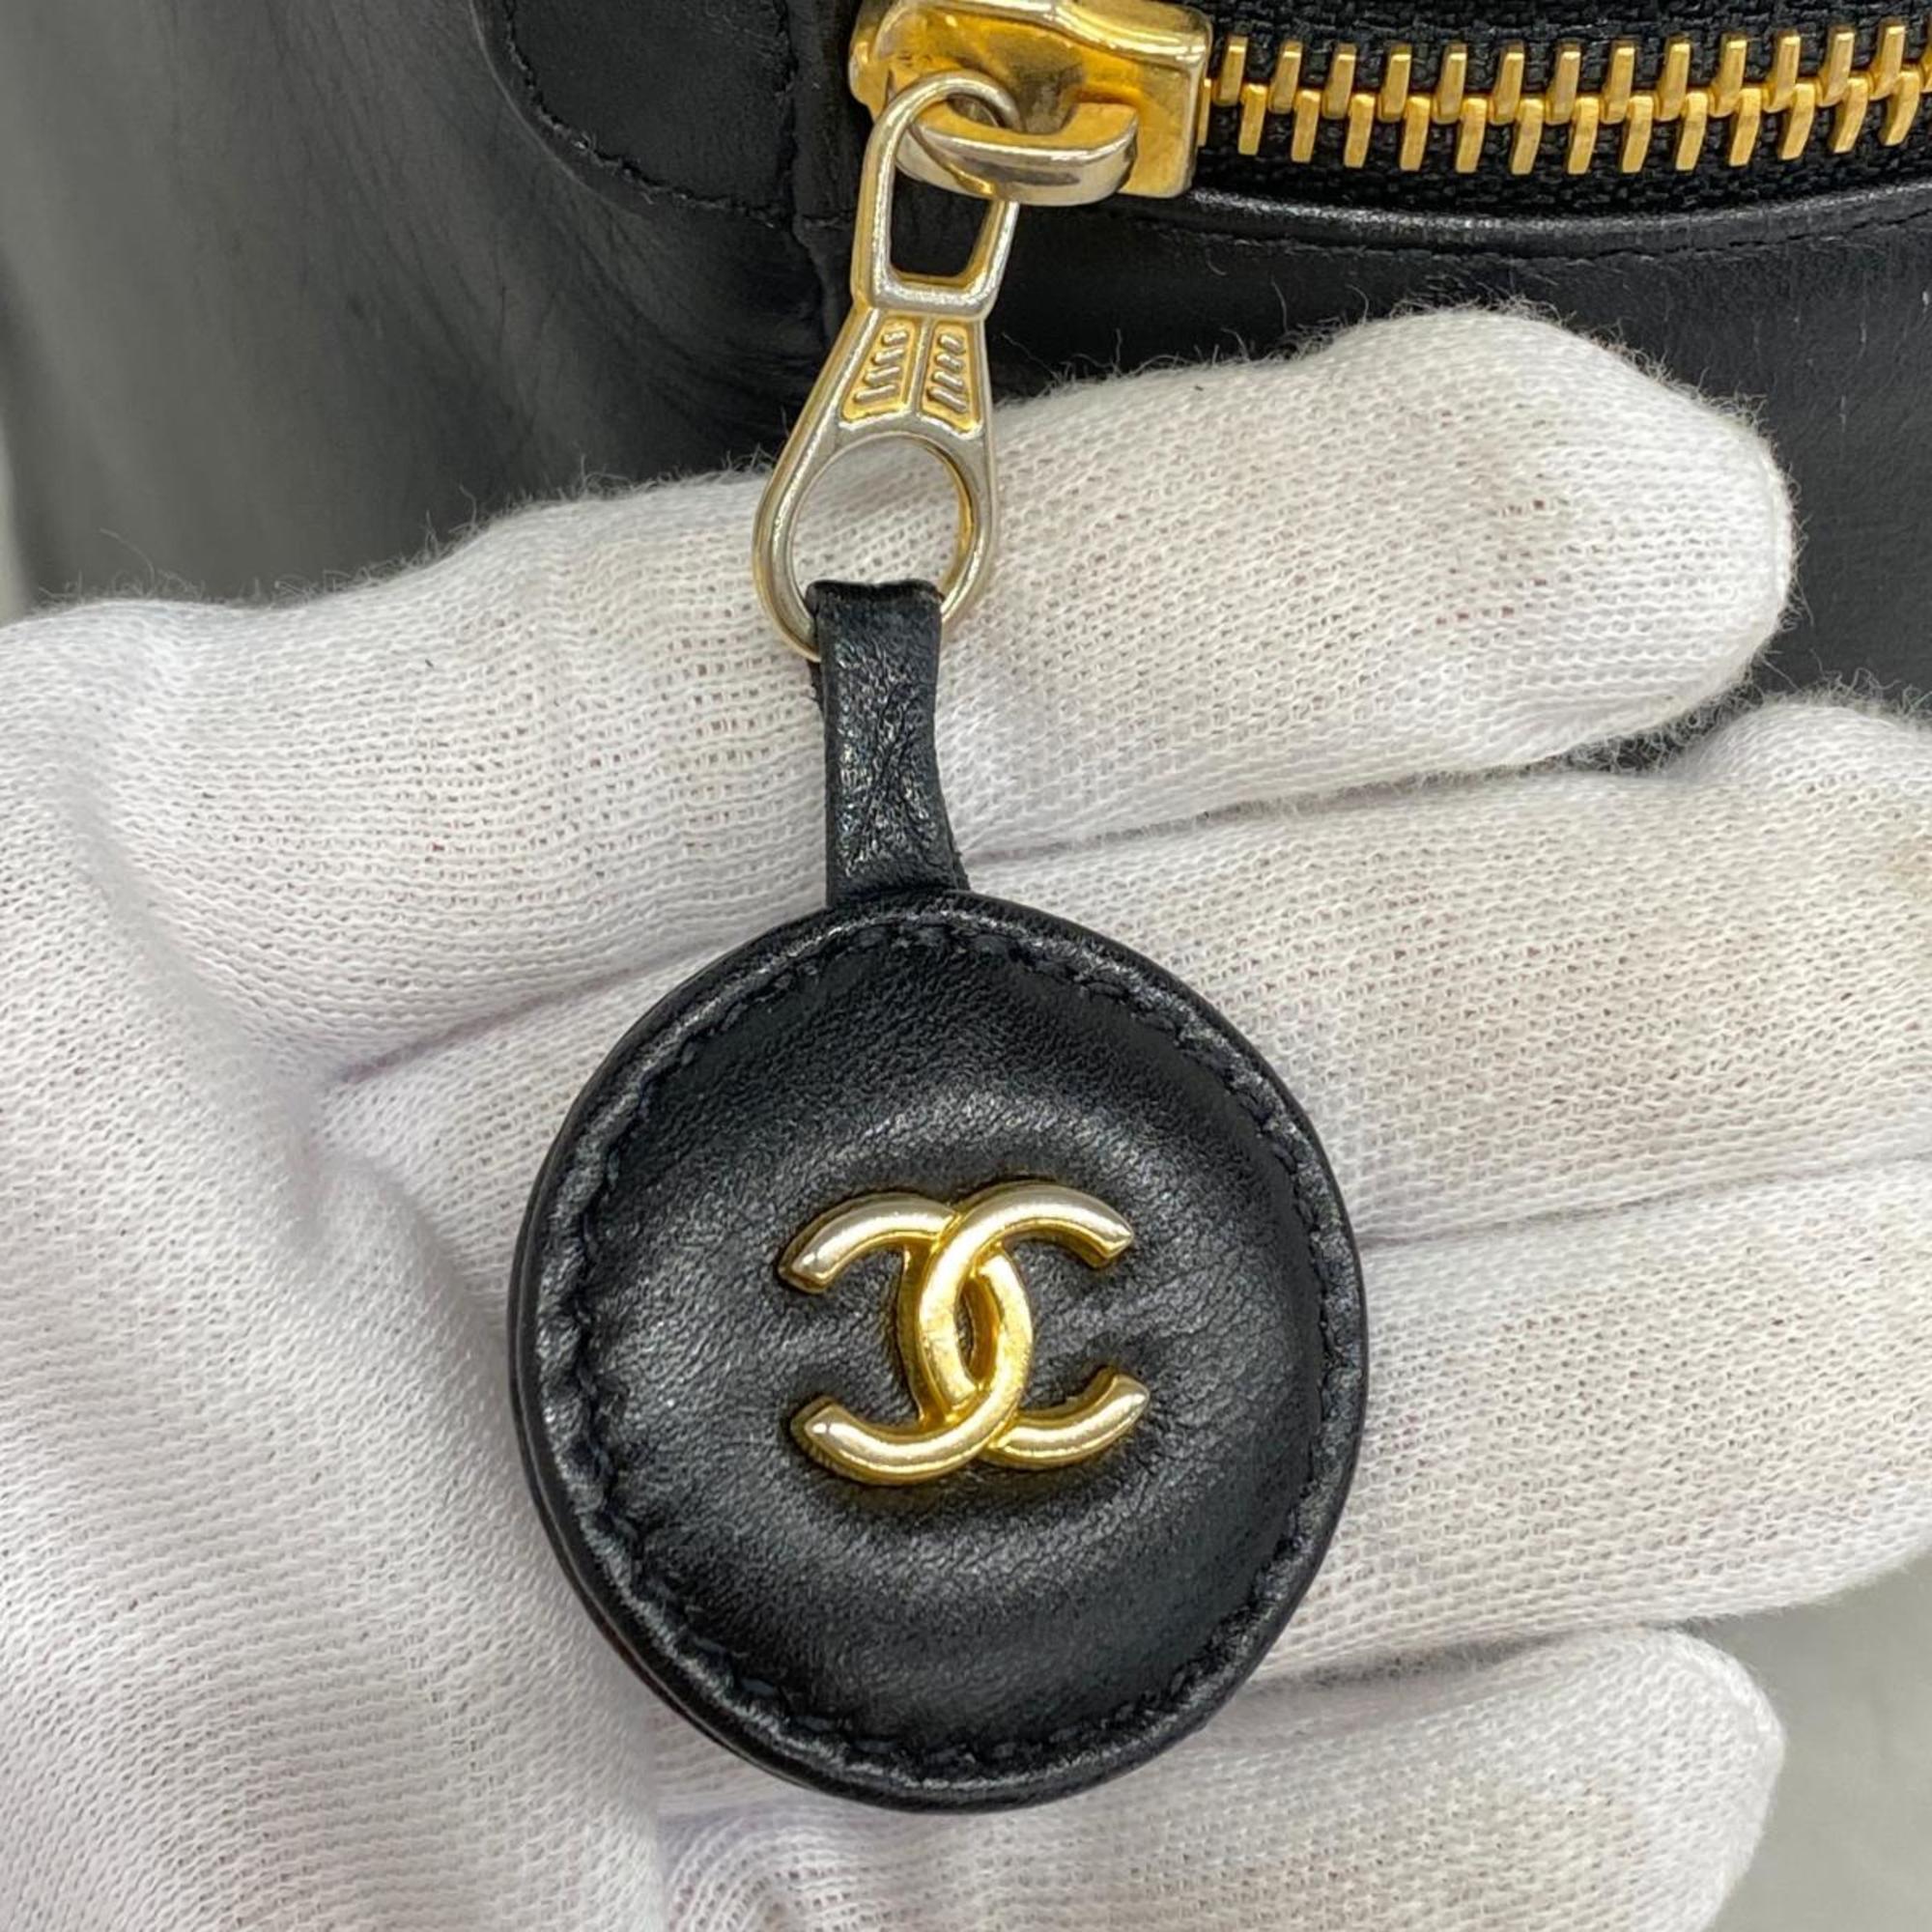 Chanel Vanity Bag Bicolor Leather Black Women's